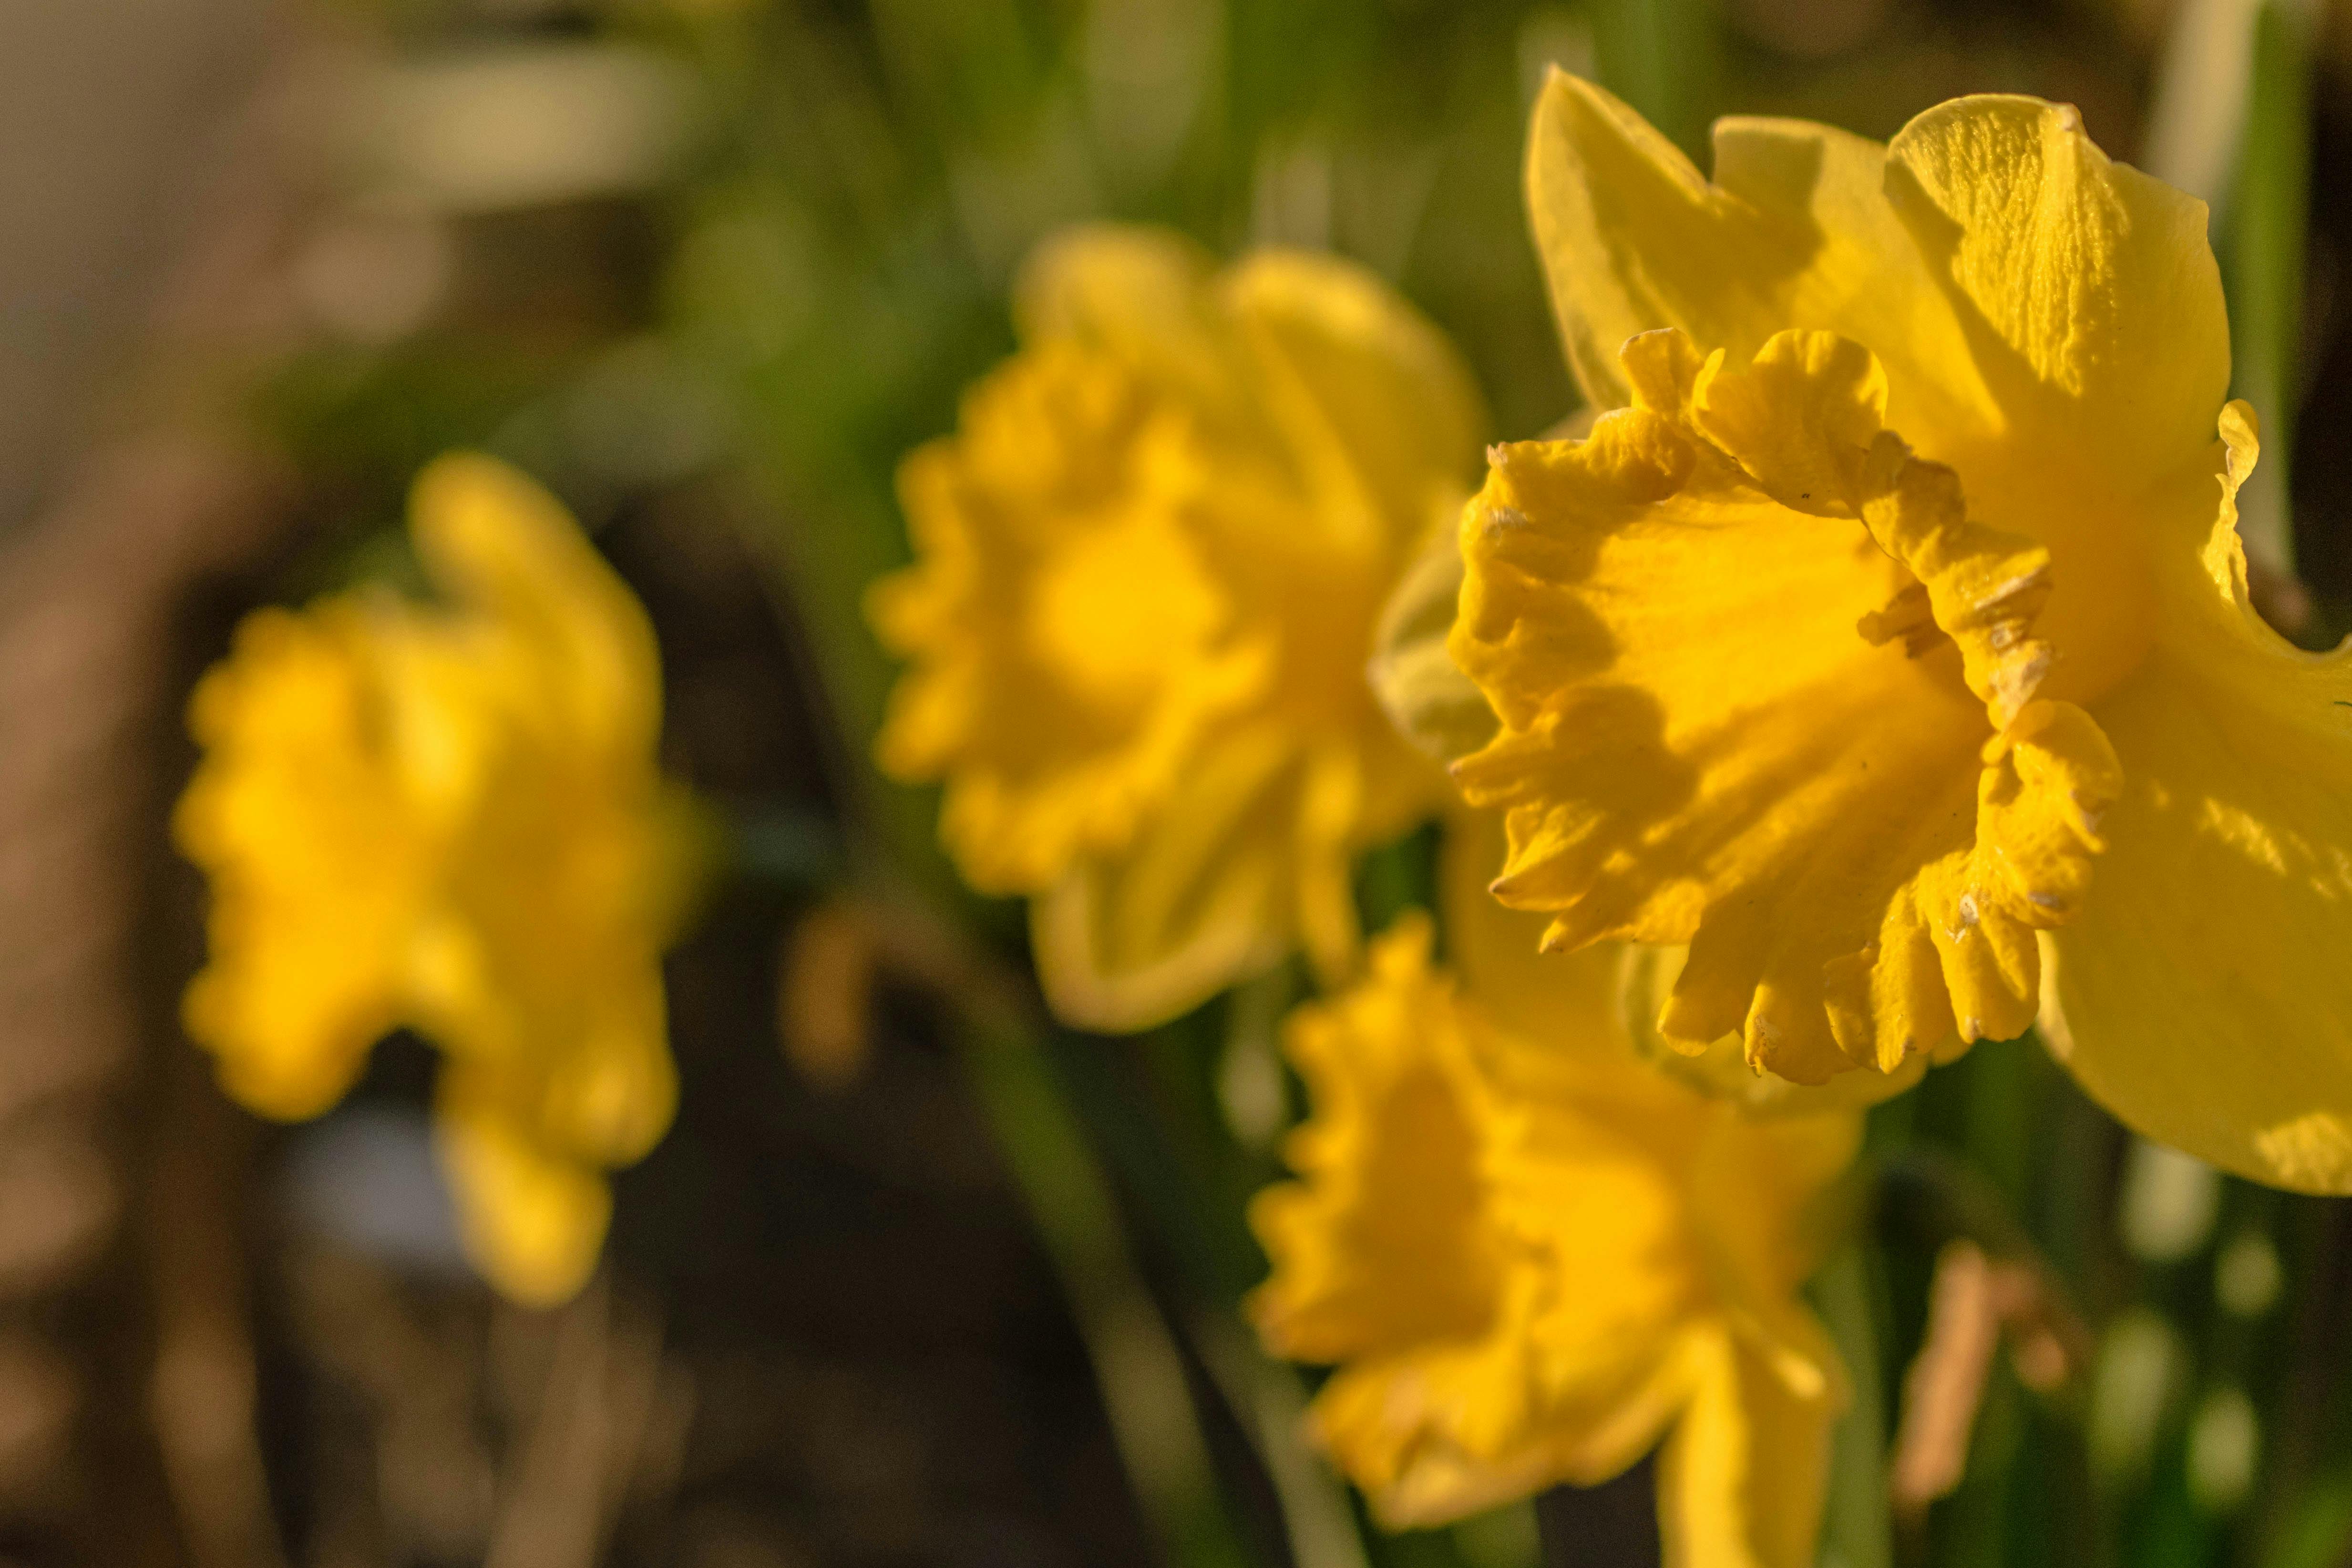 Yellow Flowers · Free Stock Photo